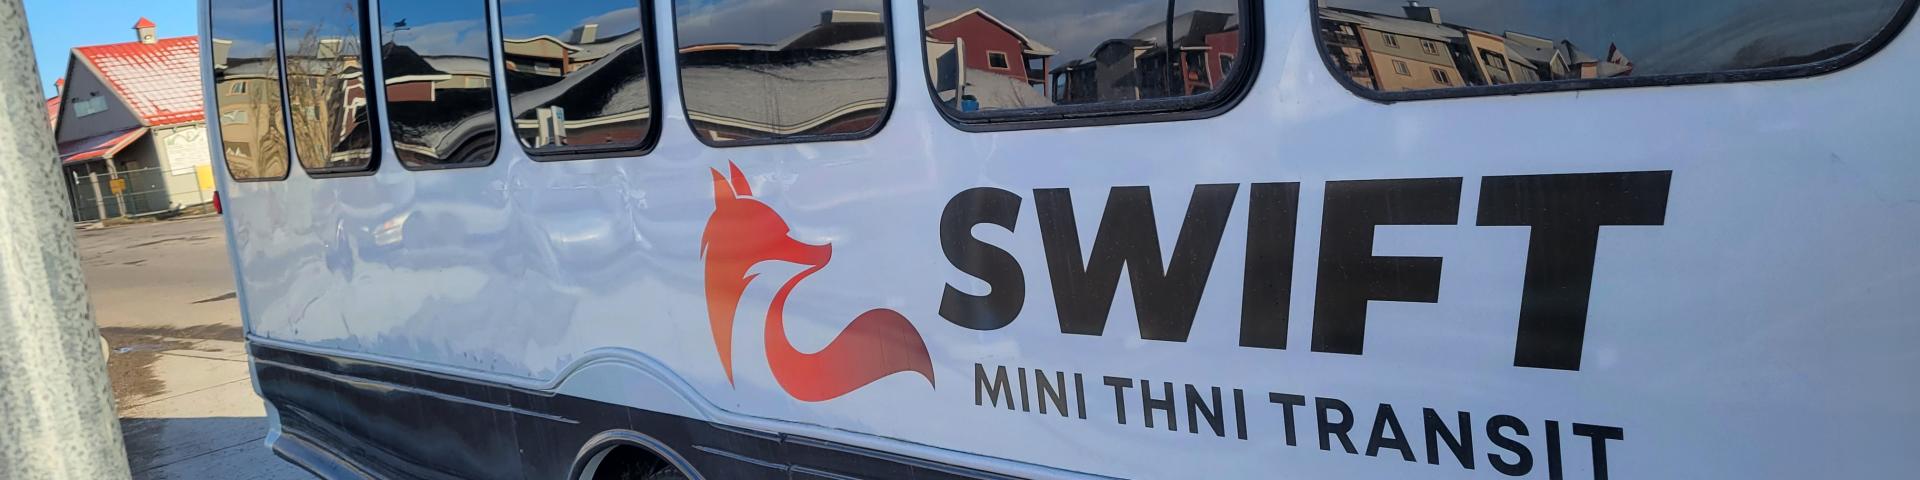 swift mini Thni transit bus